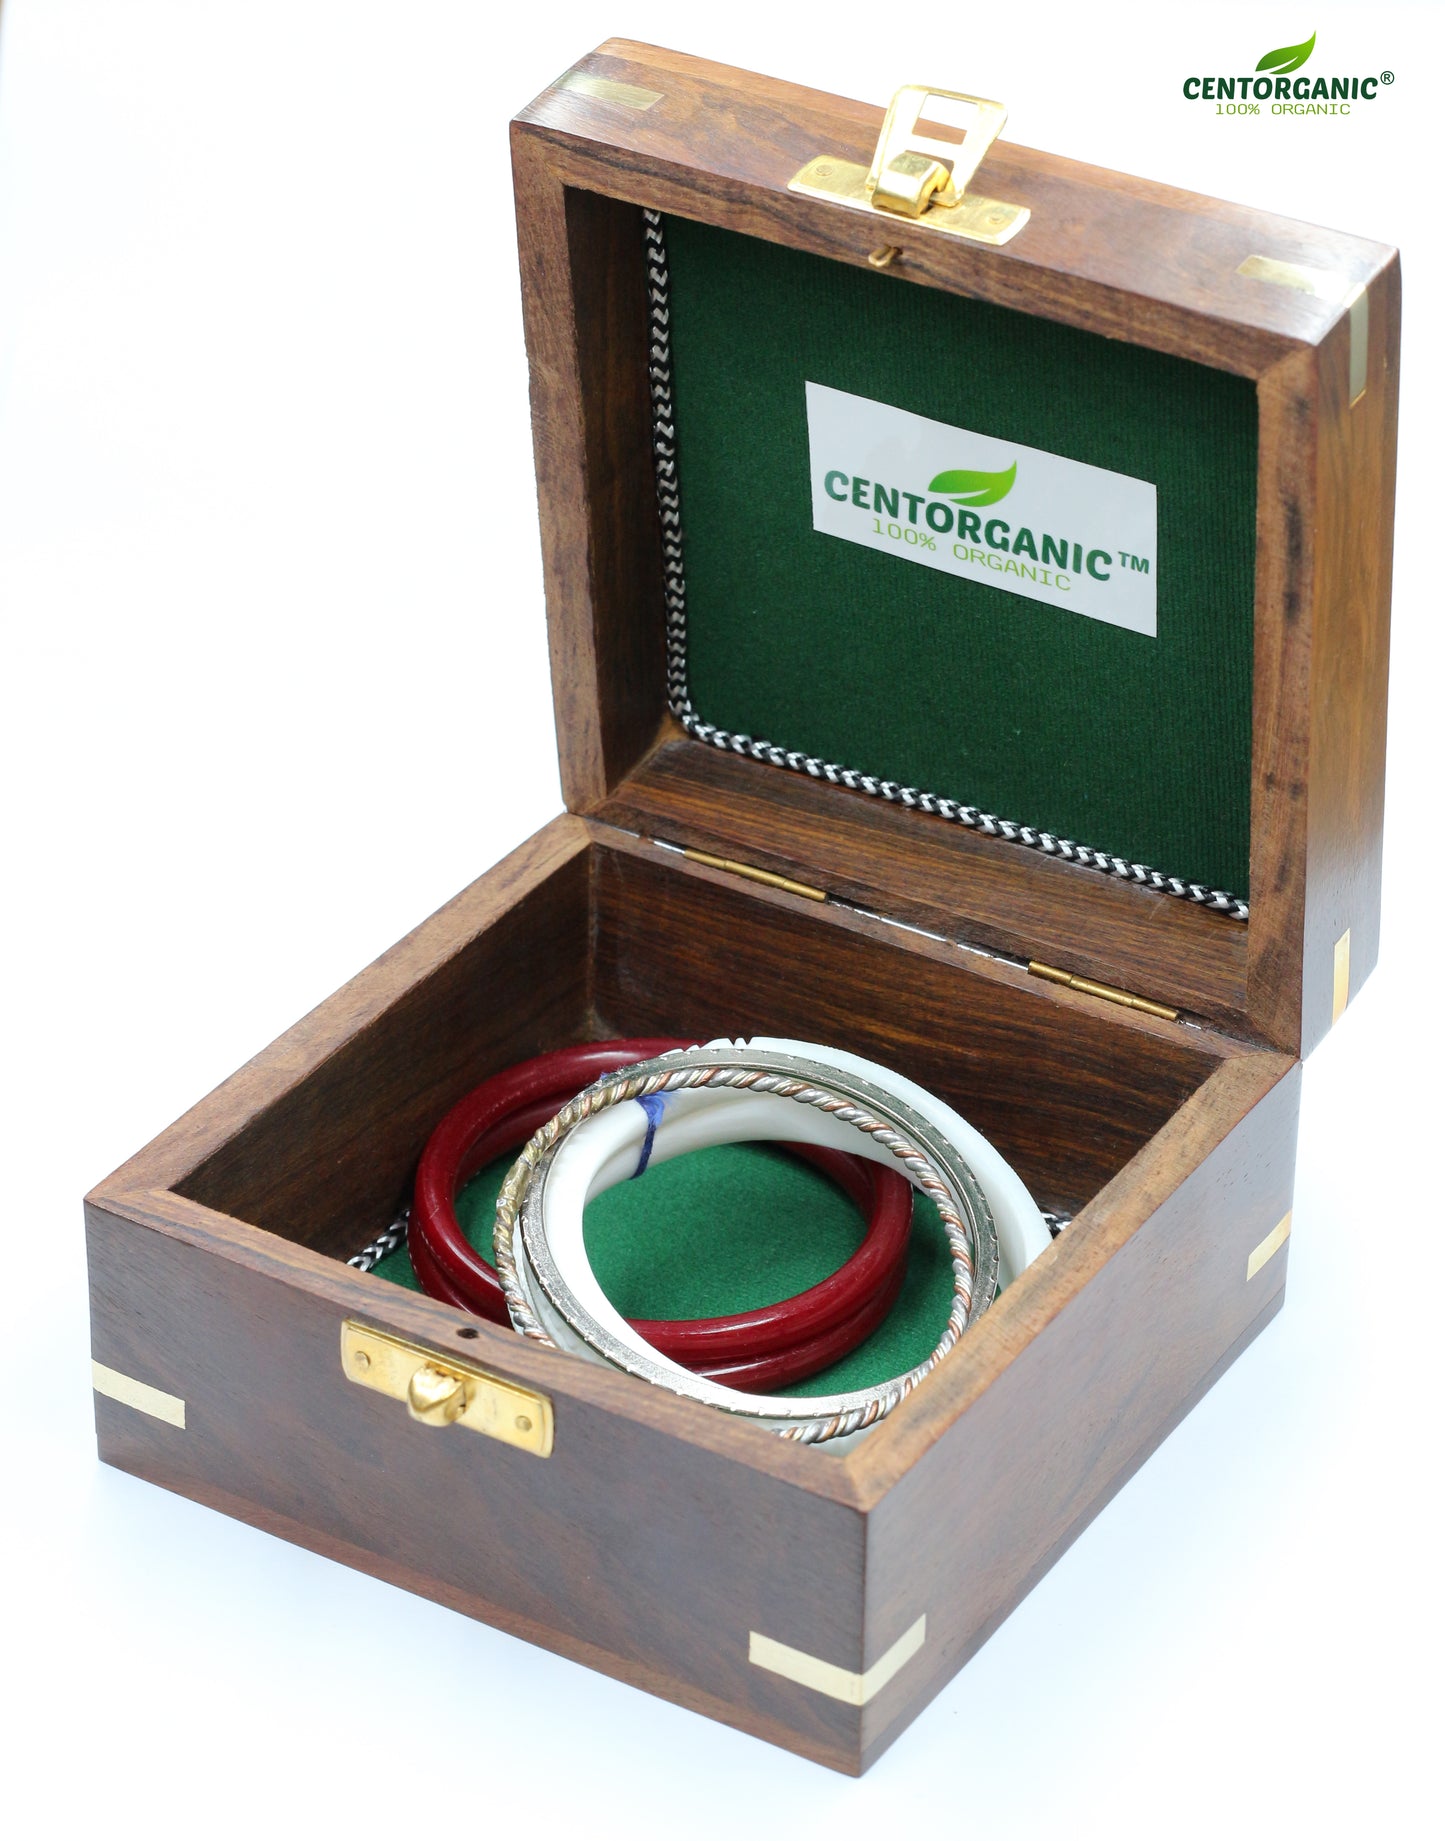 Centorganic Cutting Design sankha pola bangles for women, 1 pair of sankha, 1 pair of red pola, 2 iron noa, with free wooden jewellery box. (Design code: CSBM04)